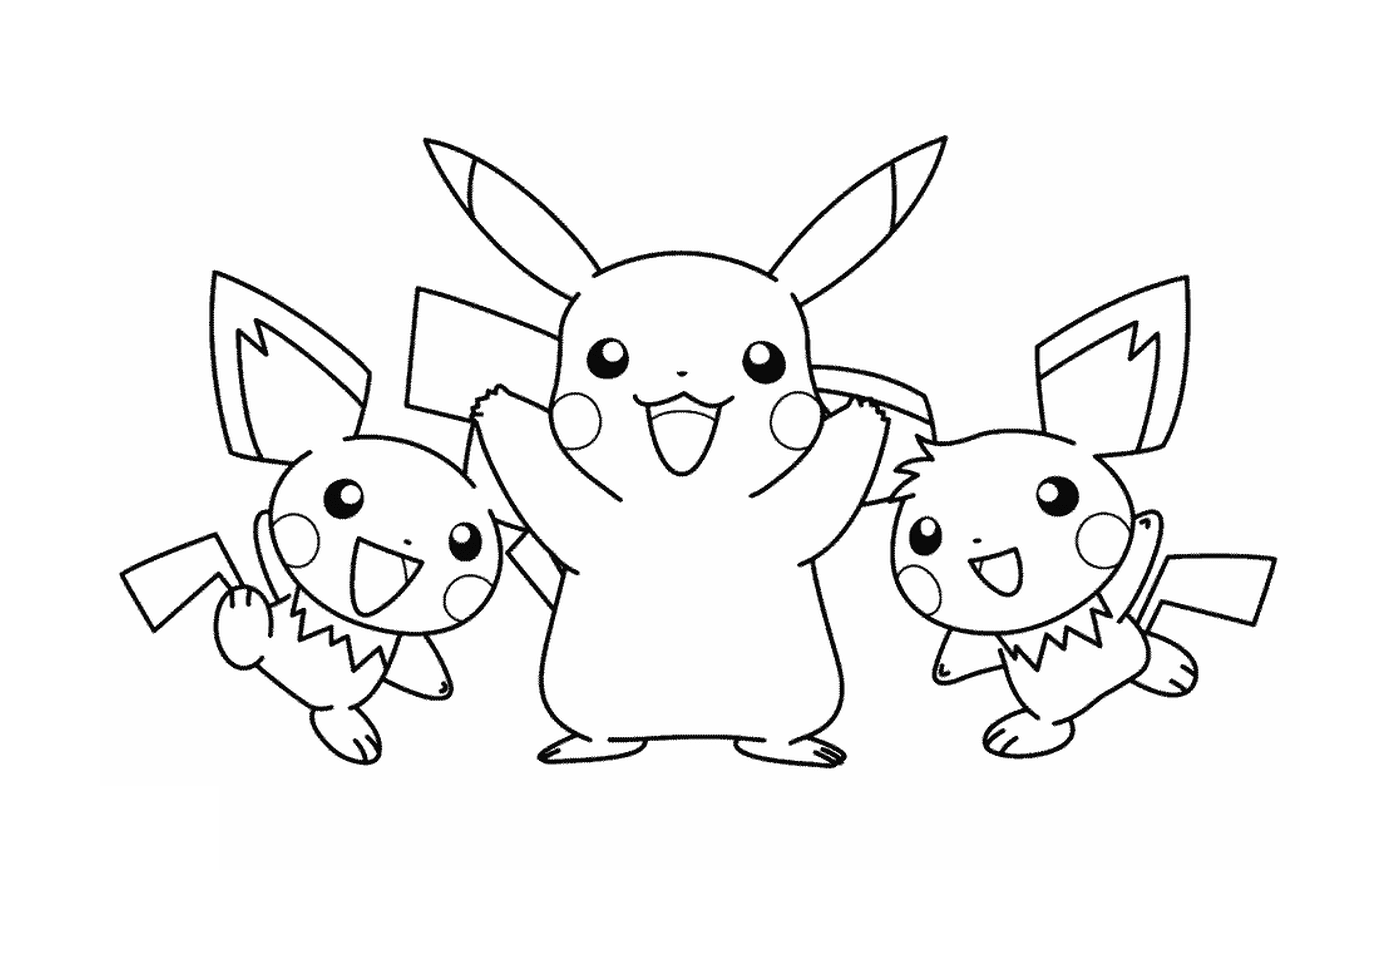 pikachu with his pichu friends pokemon